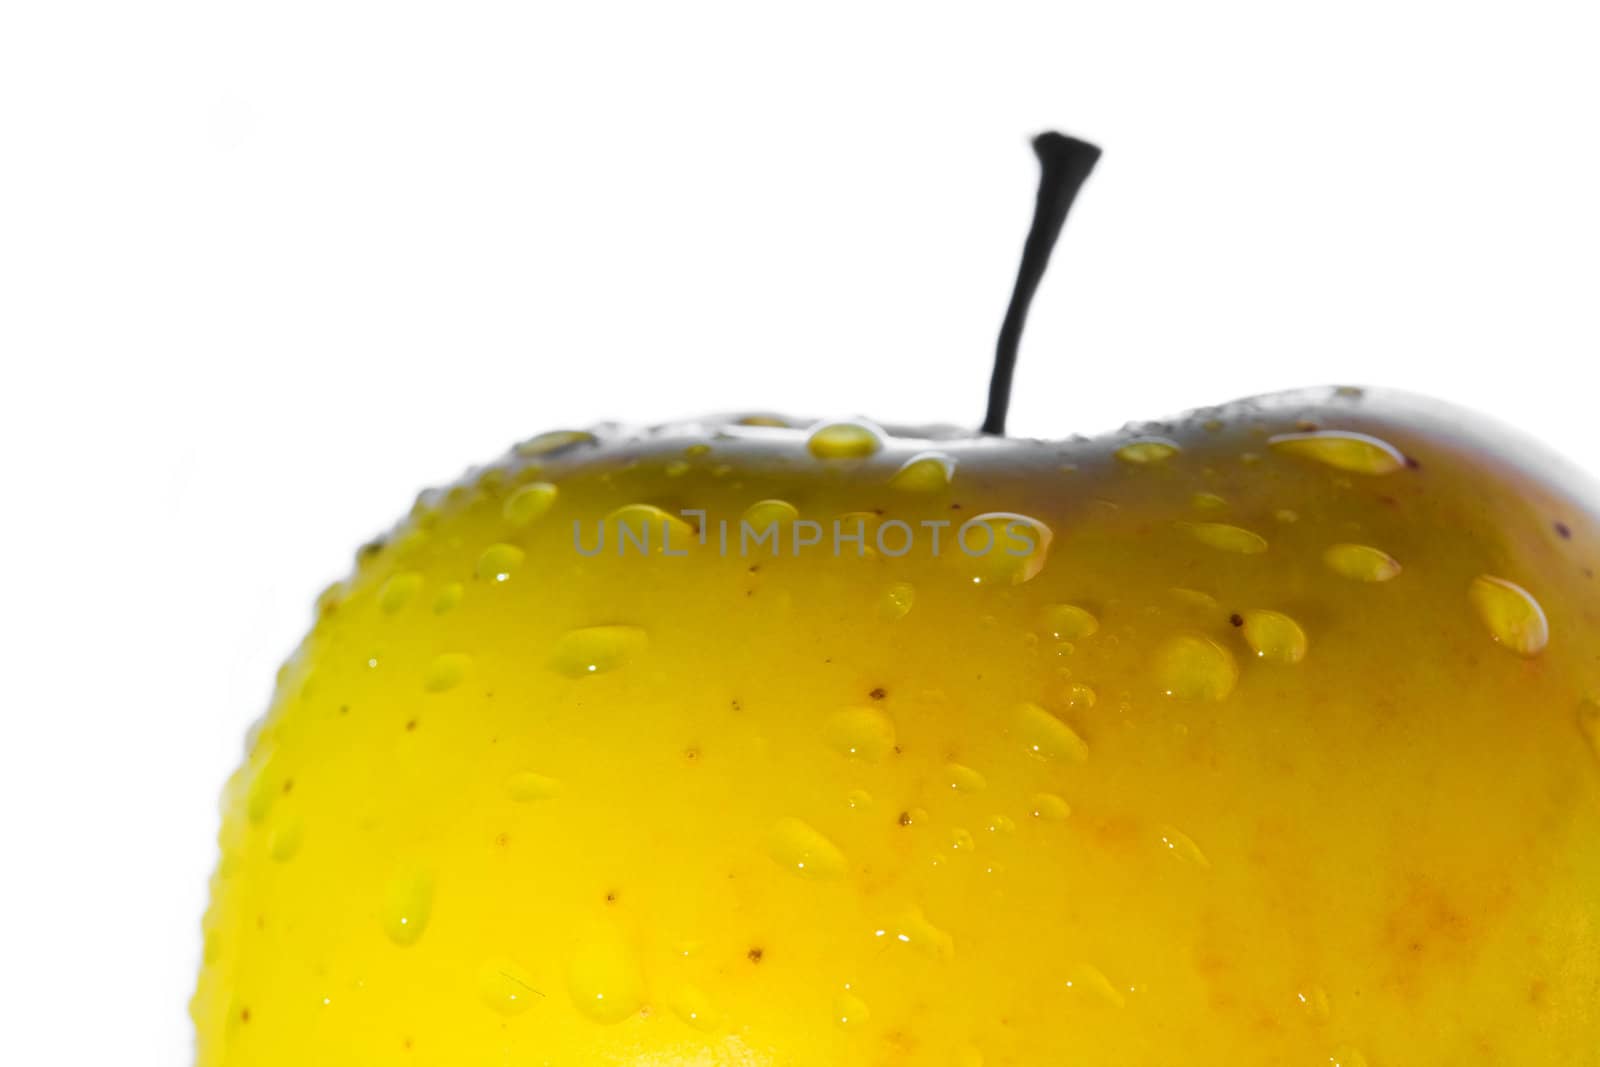 Drops on yellow apple by velkol